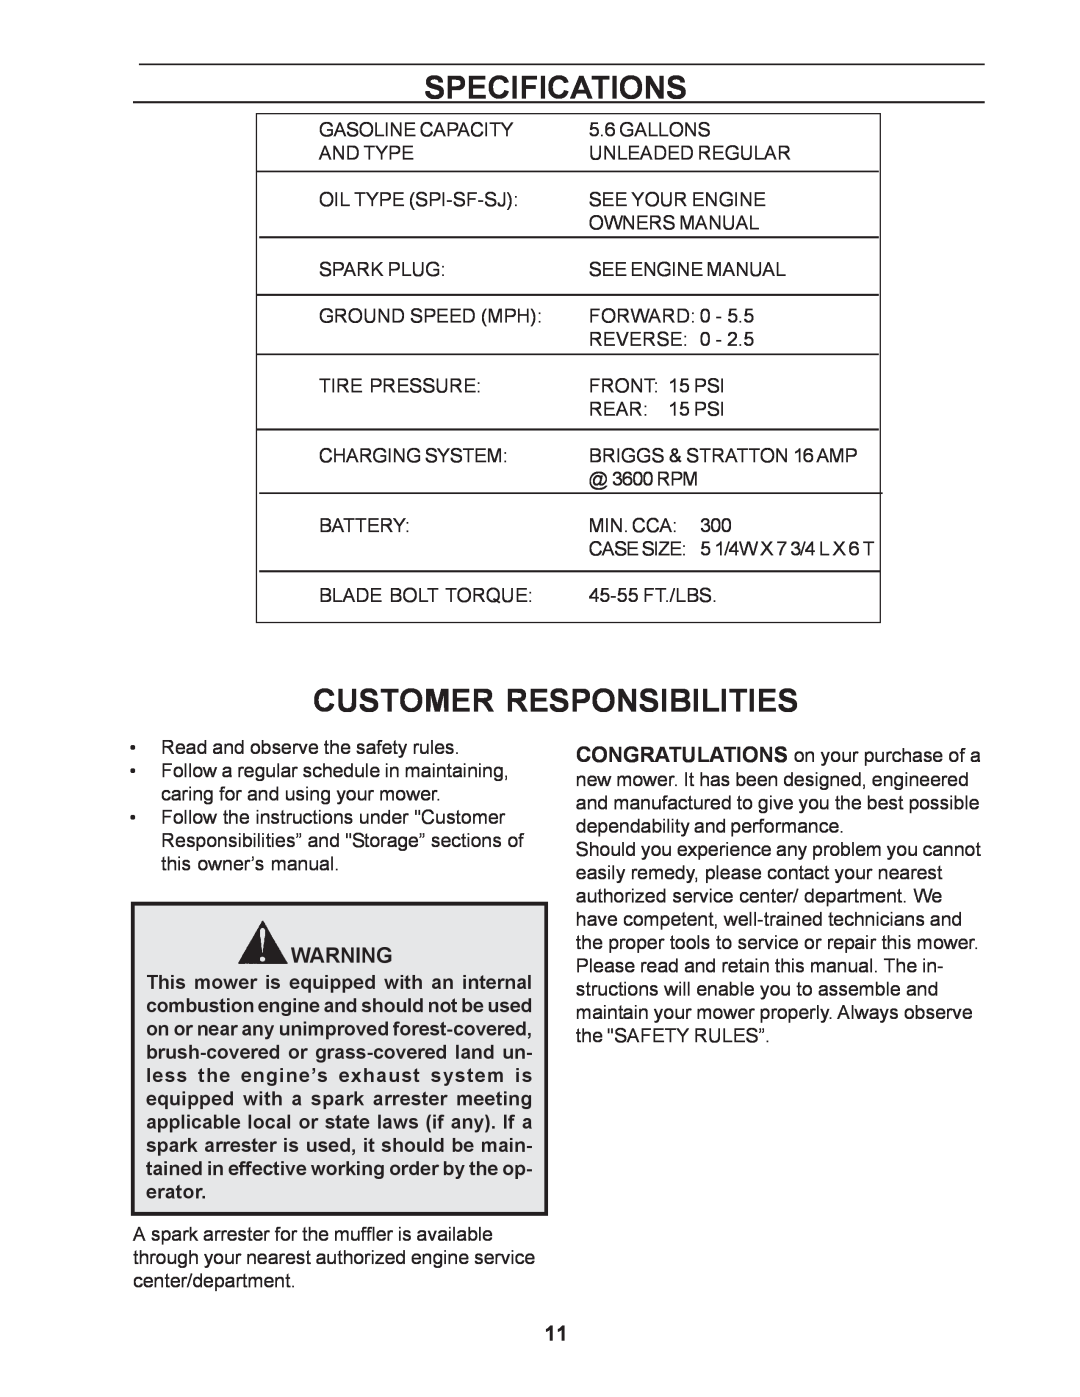 Yazoo/Kees ZCBI48181 manual Specifications, Customer Responsibilities 